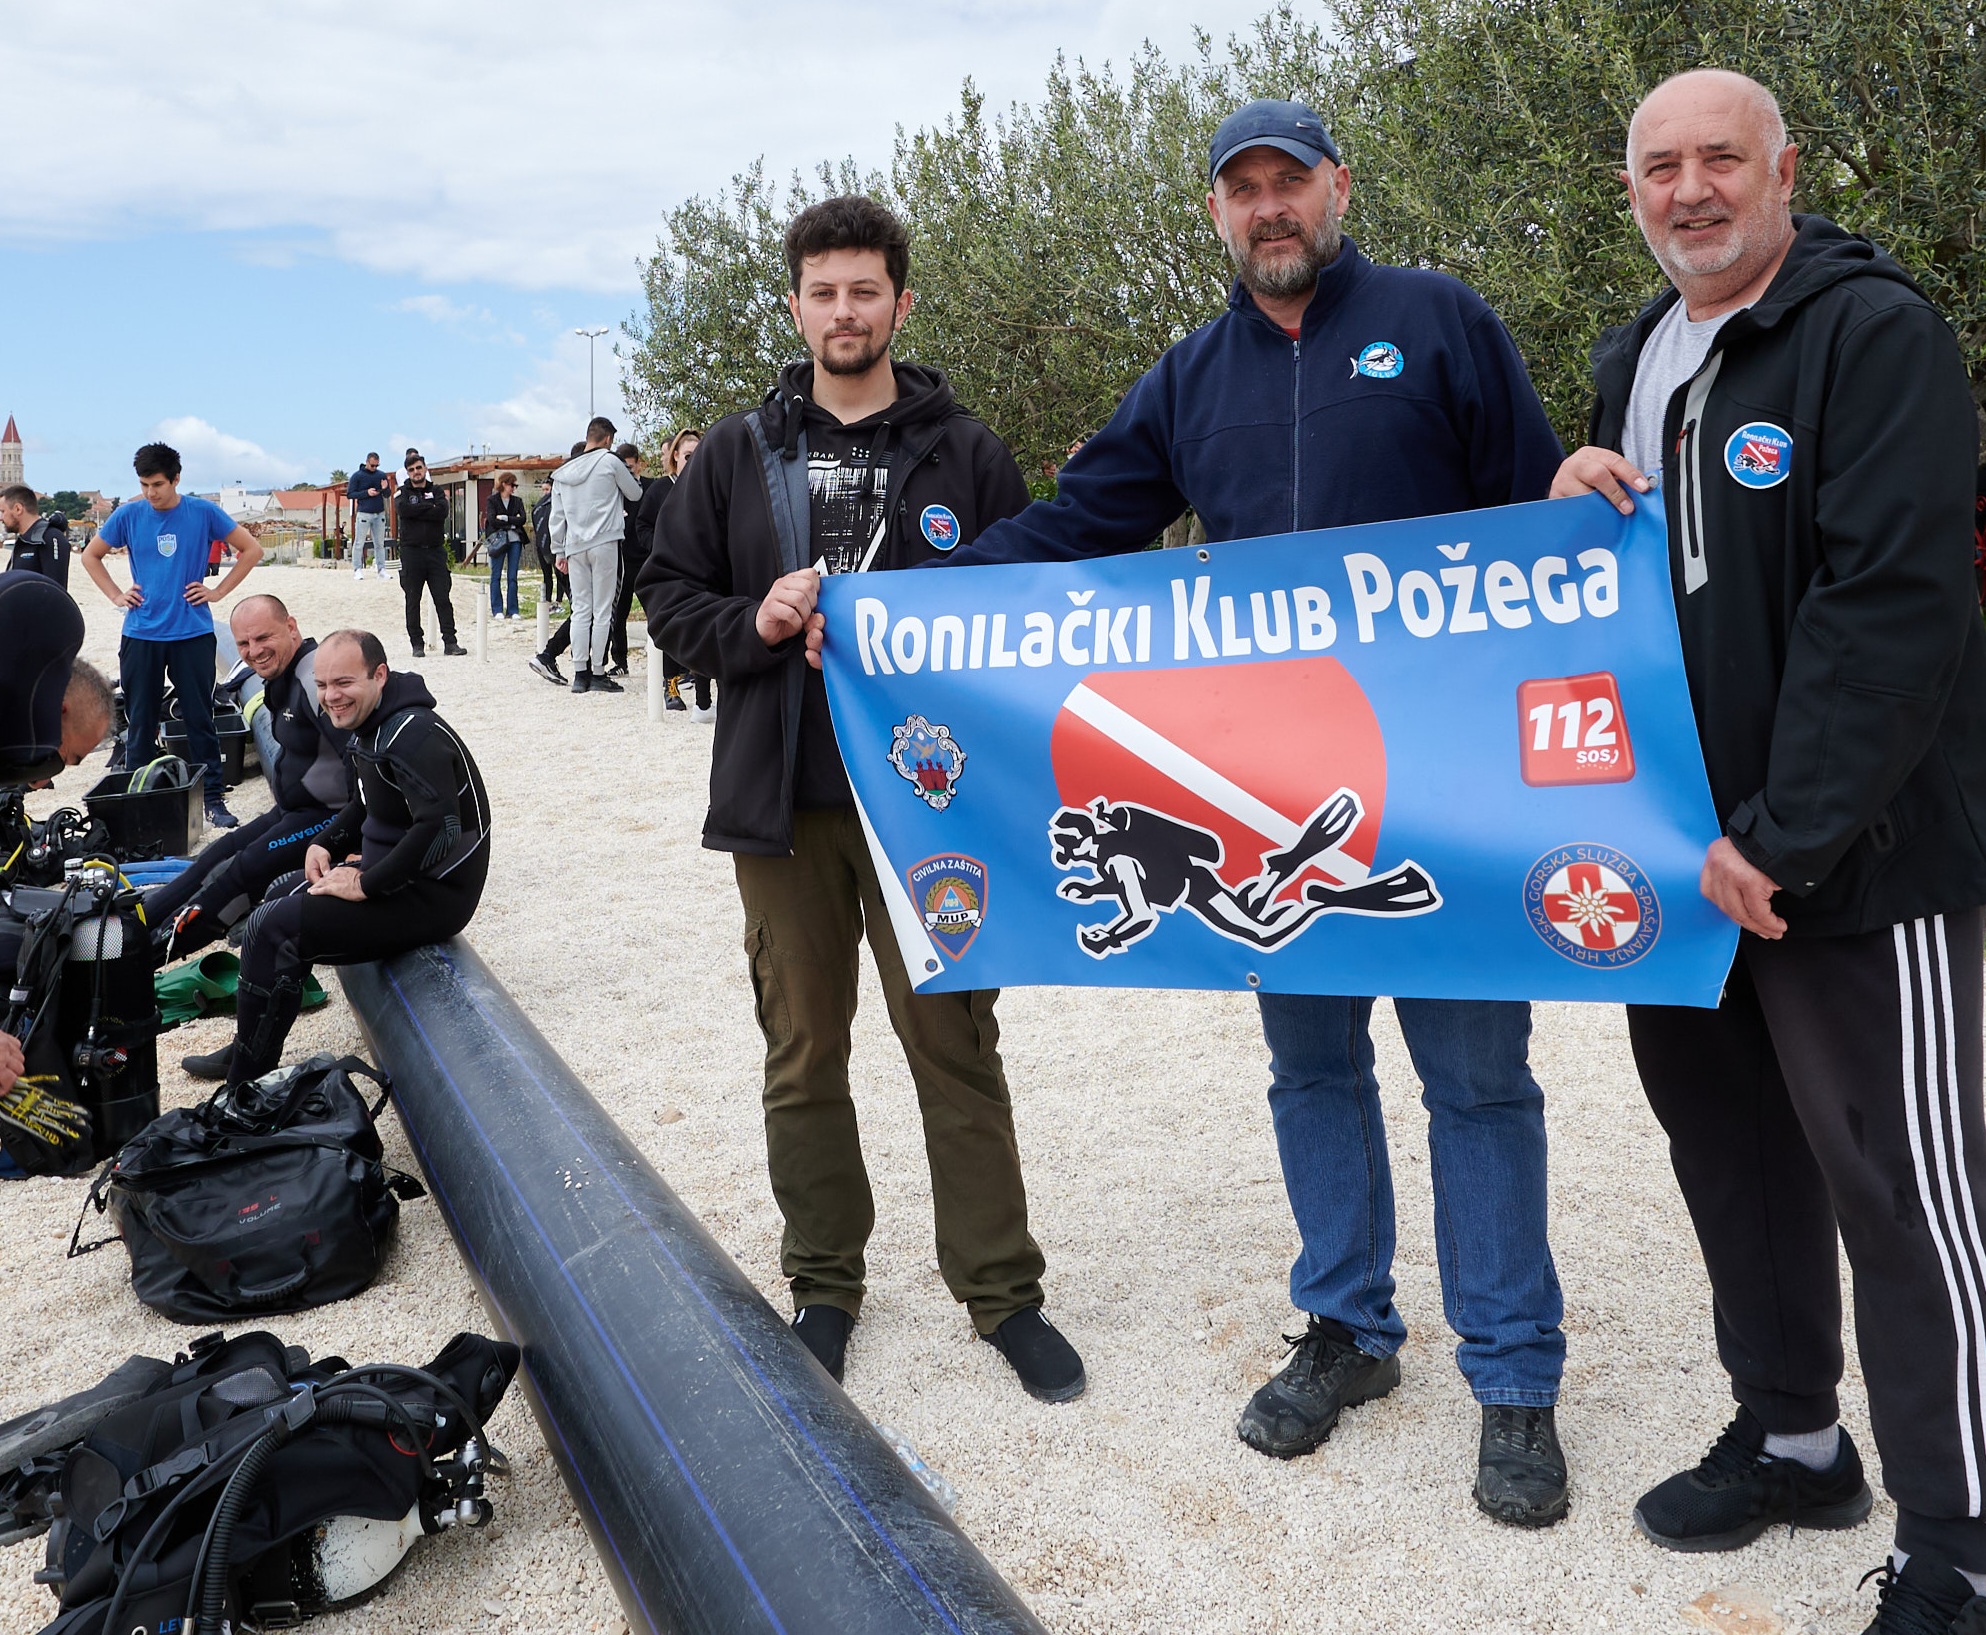 Požega.eu | Požeški ronioci čistili podmorje na Čiovu i Brigi /FOTO/